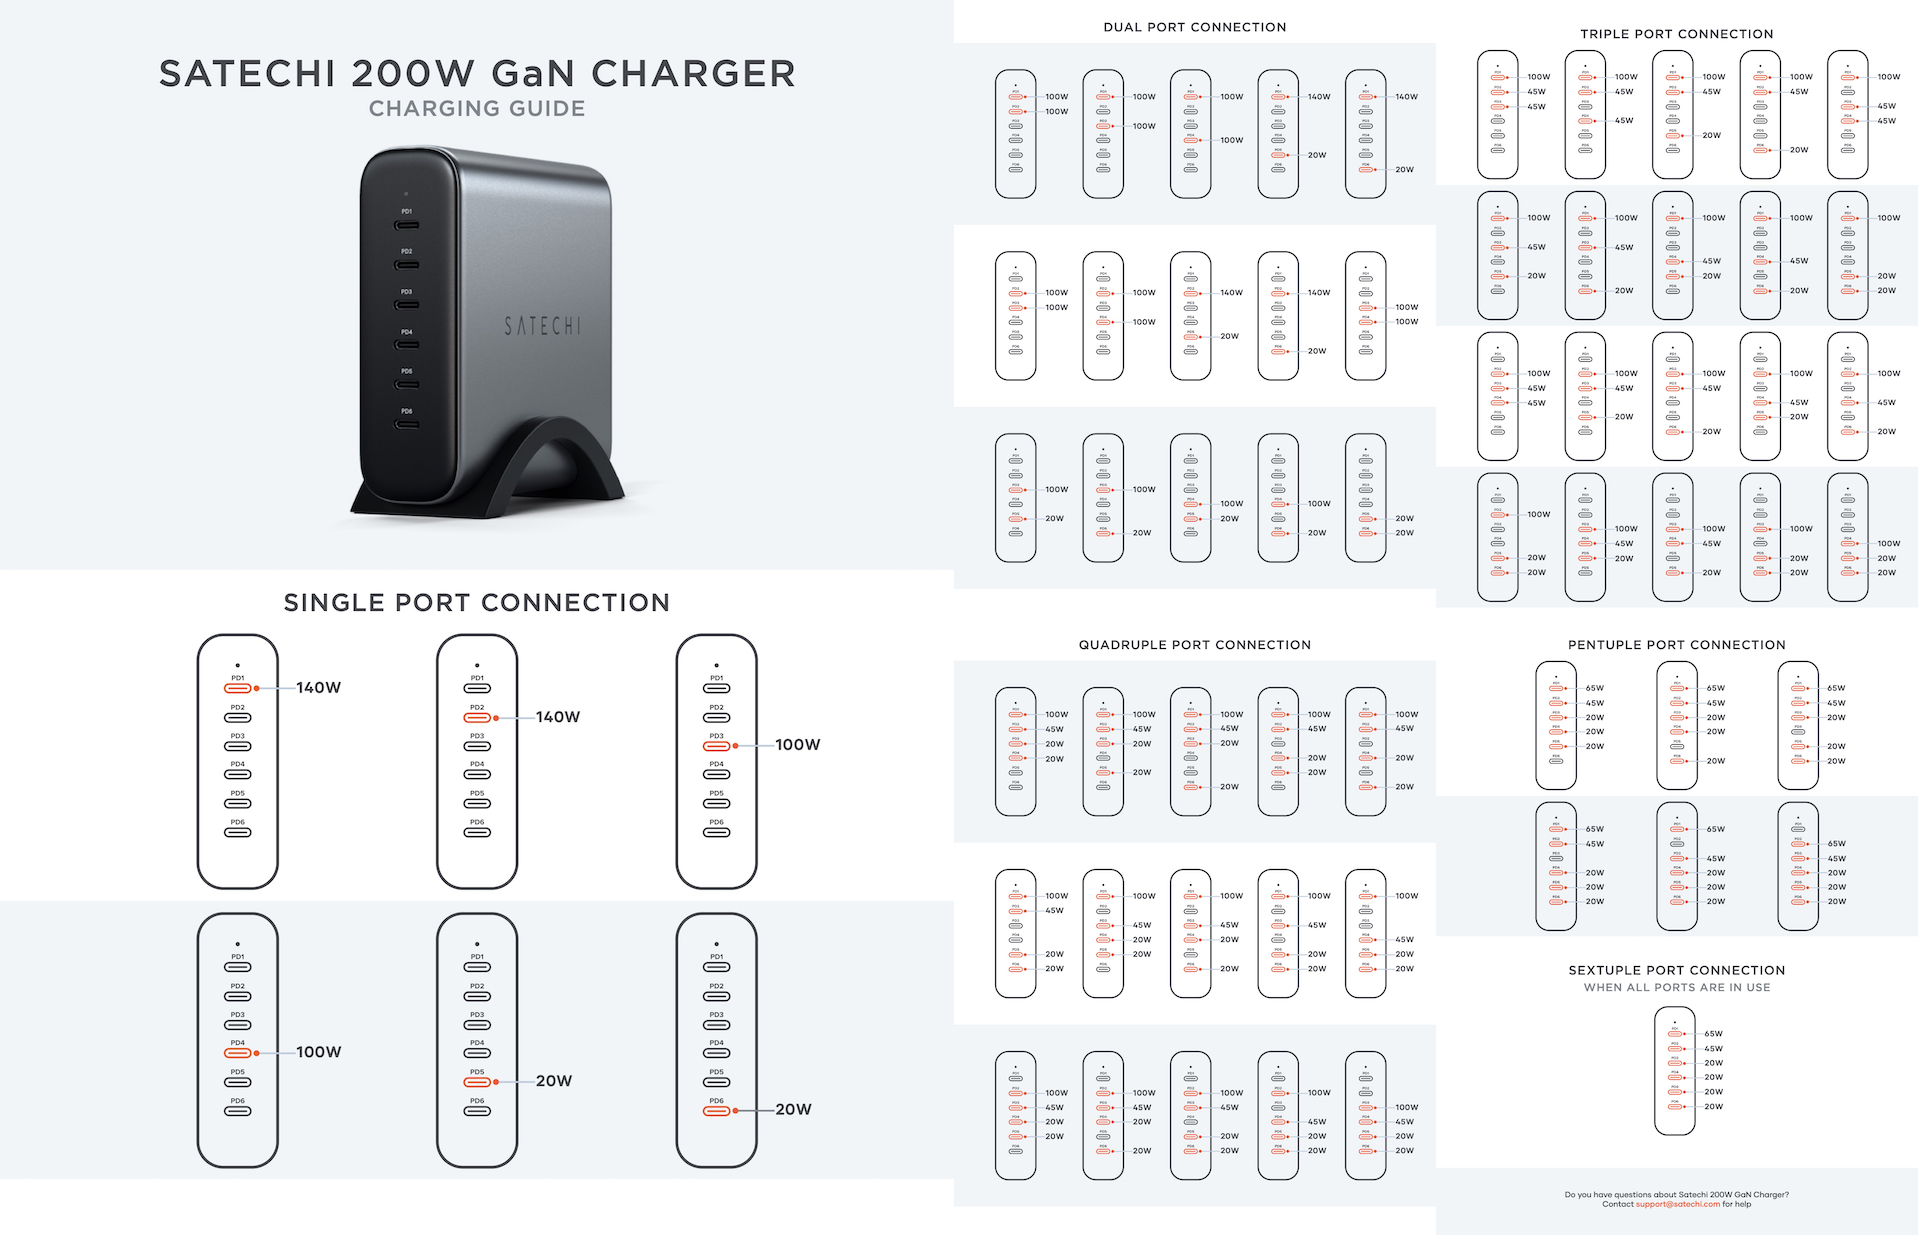 Satechi 200W USB-C 6-Port GaN Chargerの出力仕様